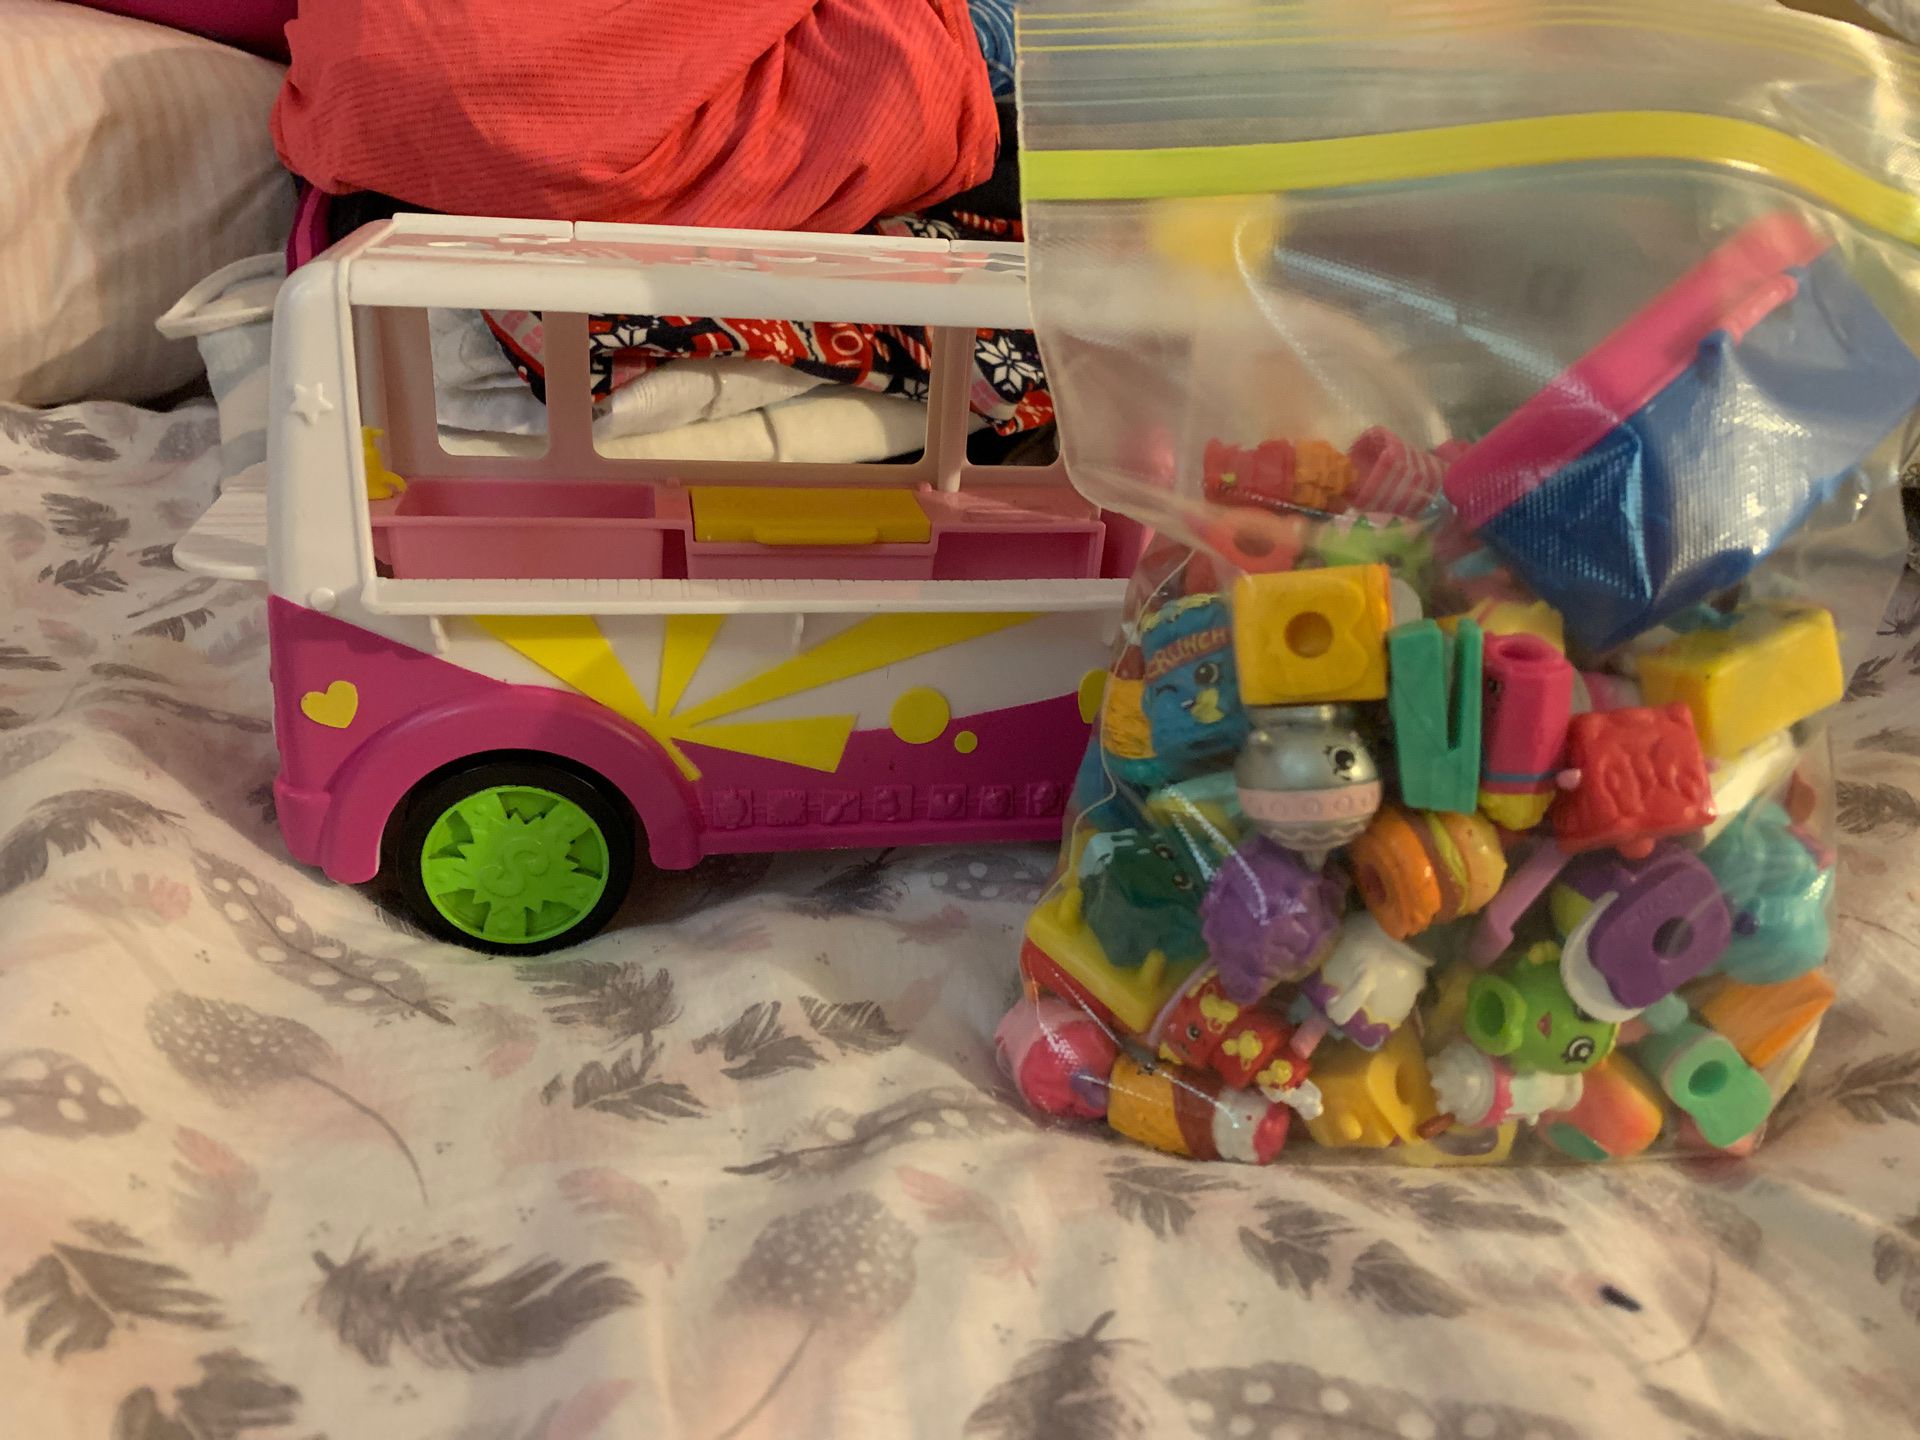 Shopkins car and toys.